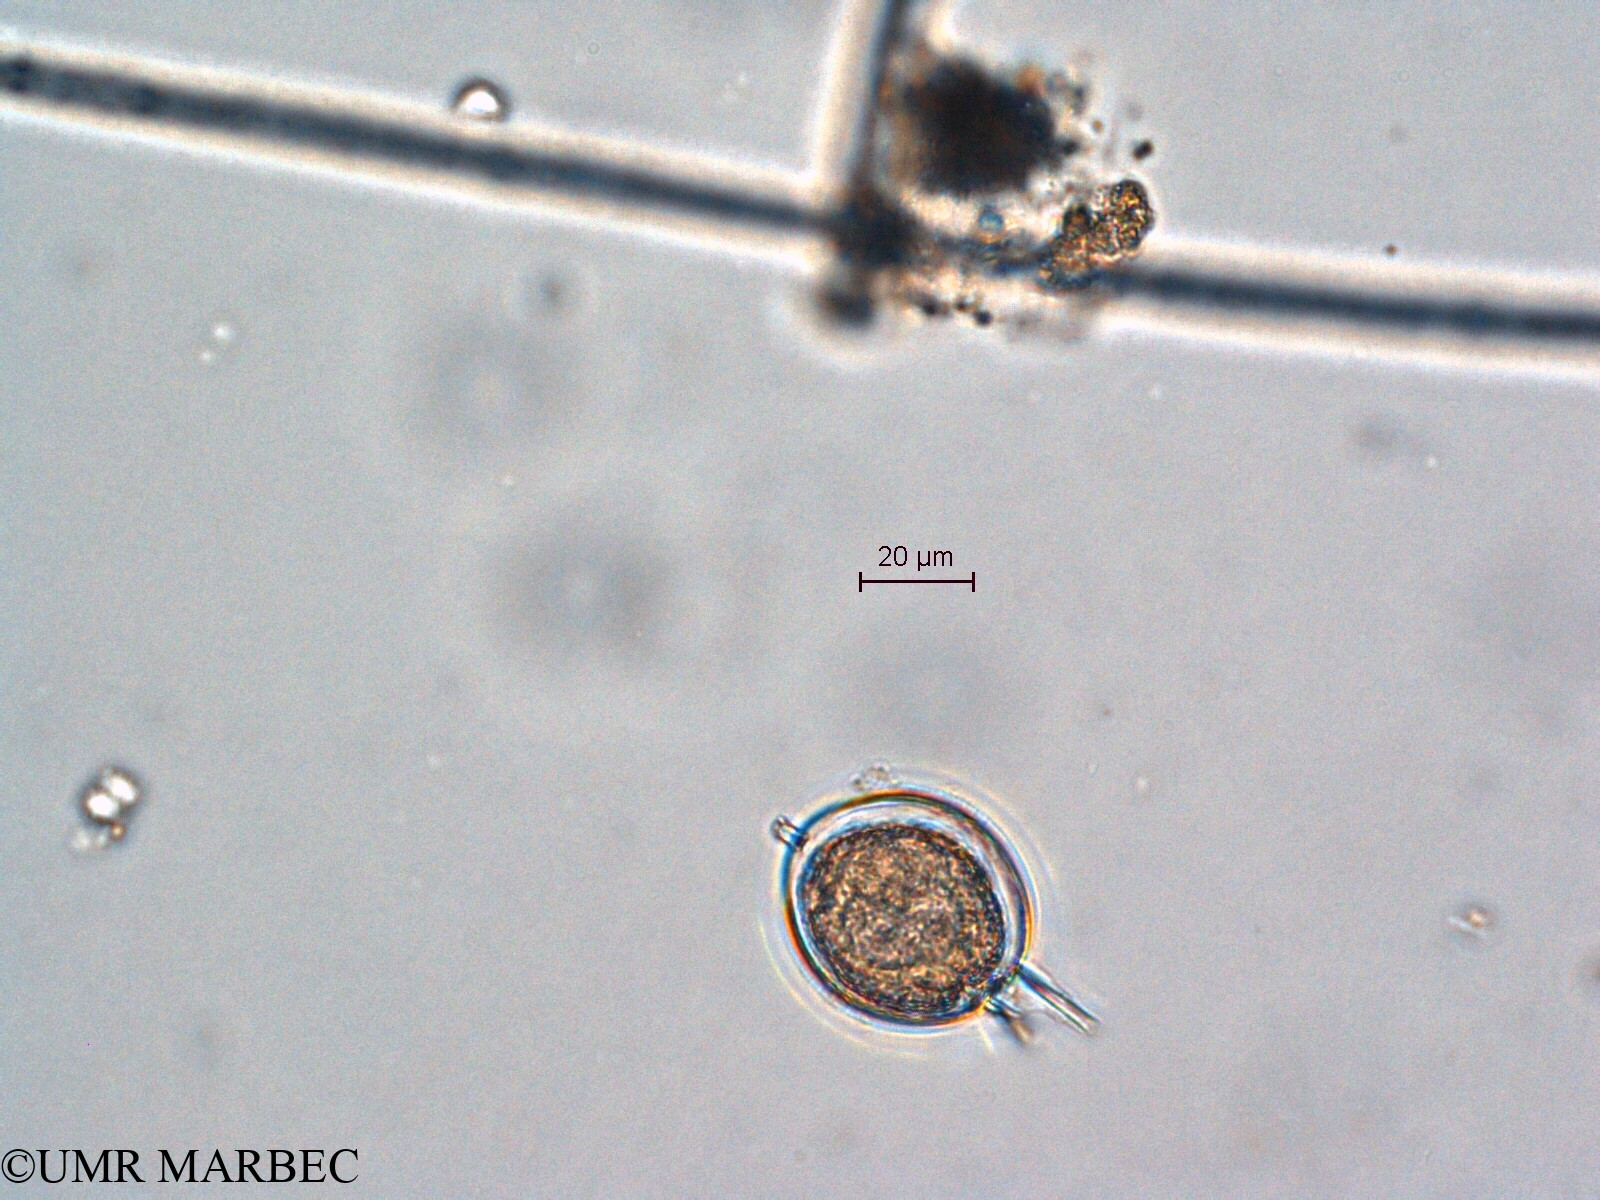 phyto/Scattered_Islands/all/COMMA April 2011/Protoperidinium sp29 (ancien Protoperidinium sp20 cf angusticollis recomposé)(copy).jpg